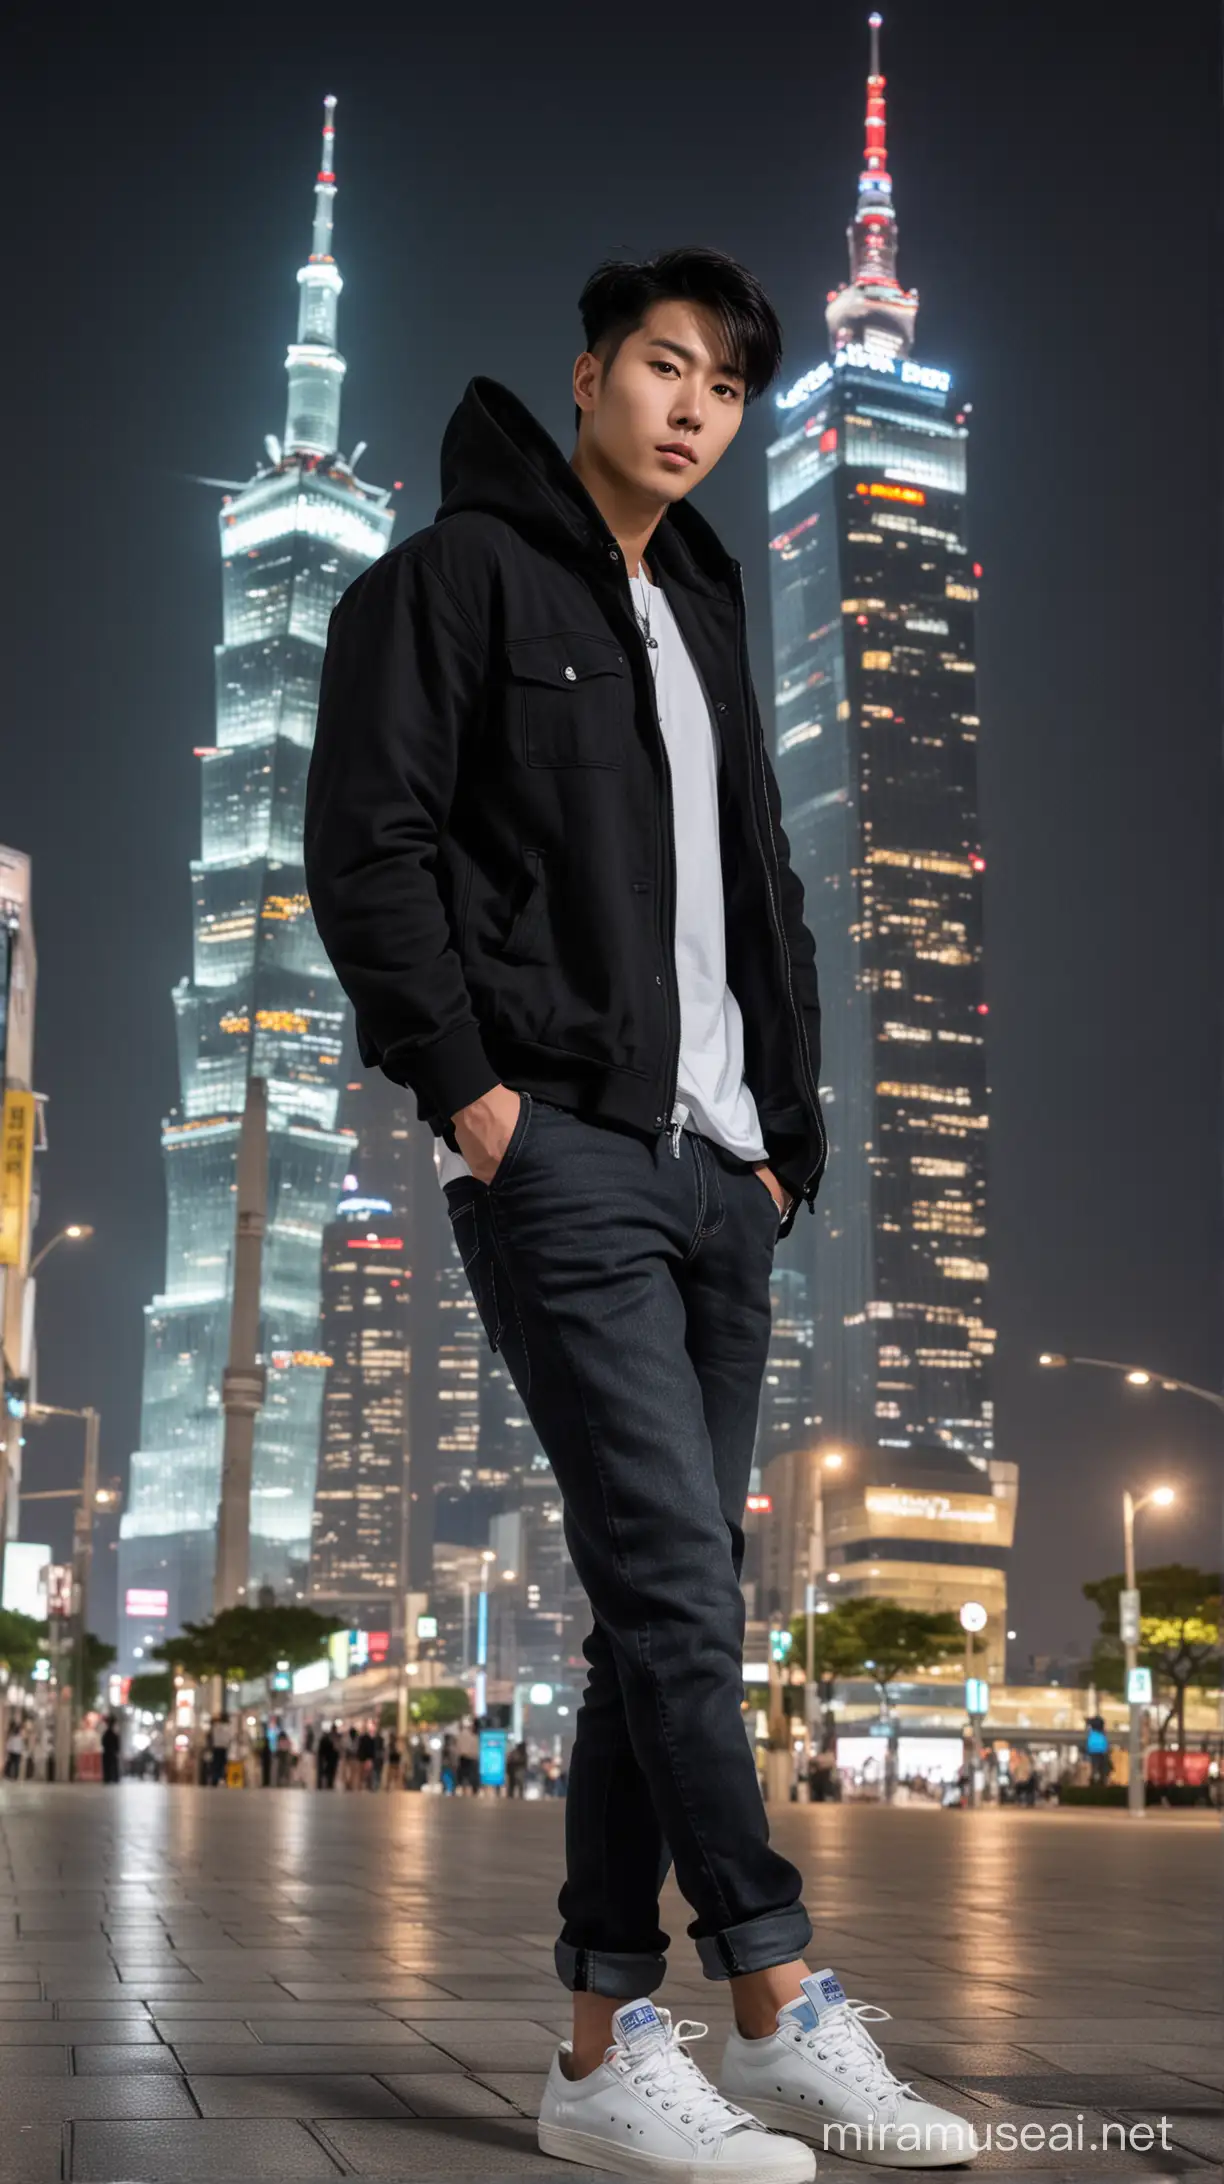 Stylish Korean Man Poses Under Taipei 101 Tower at Night